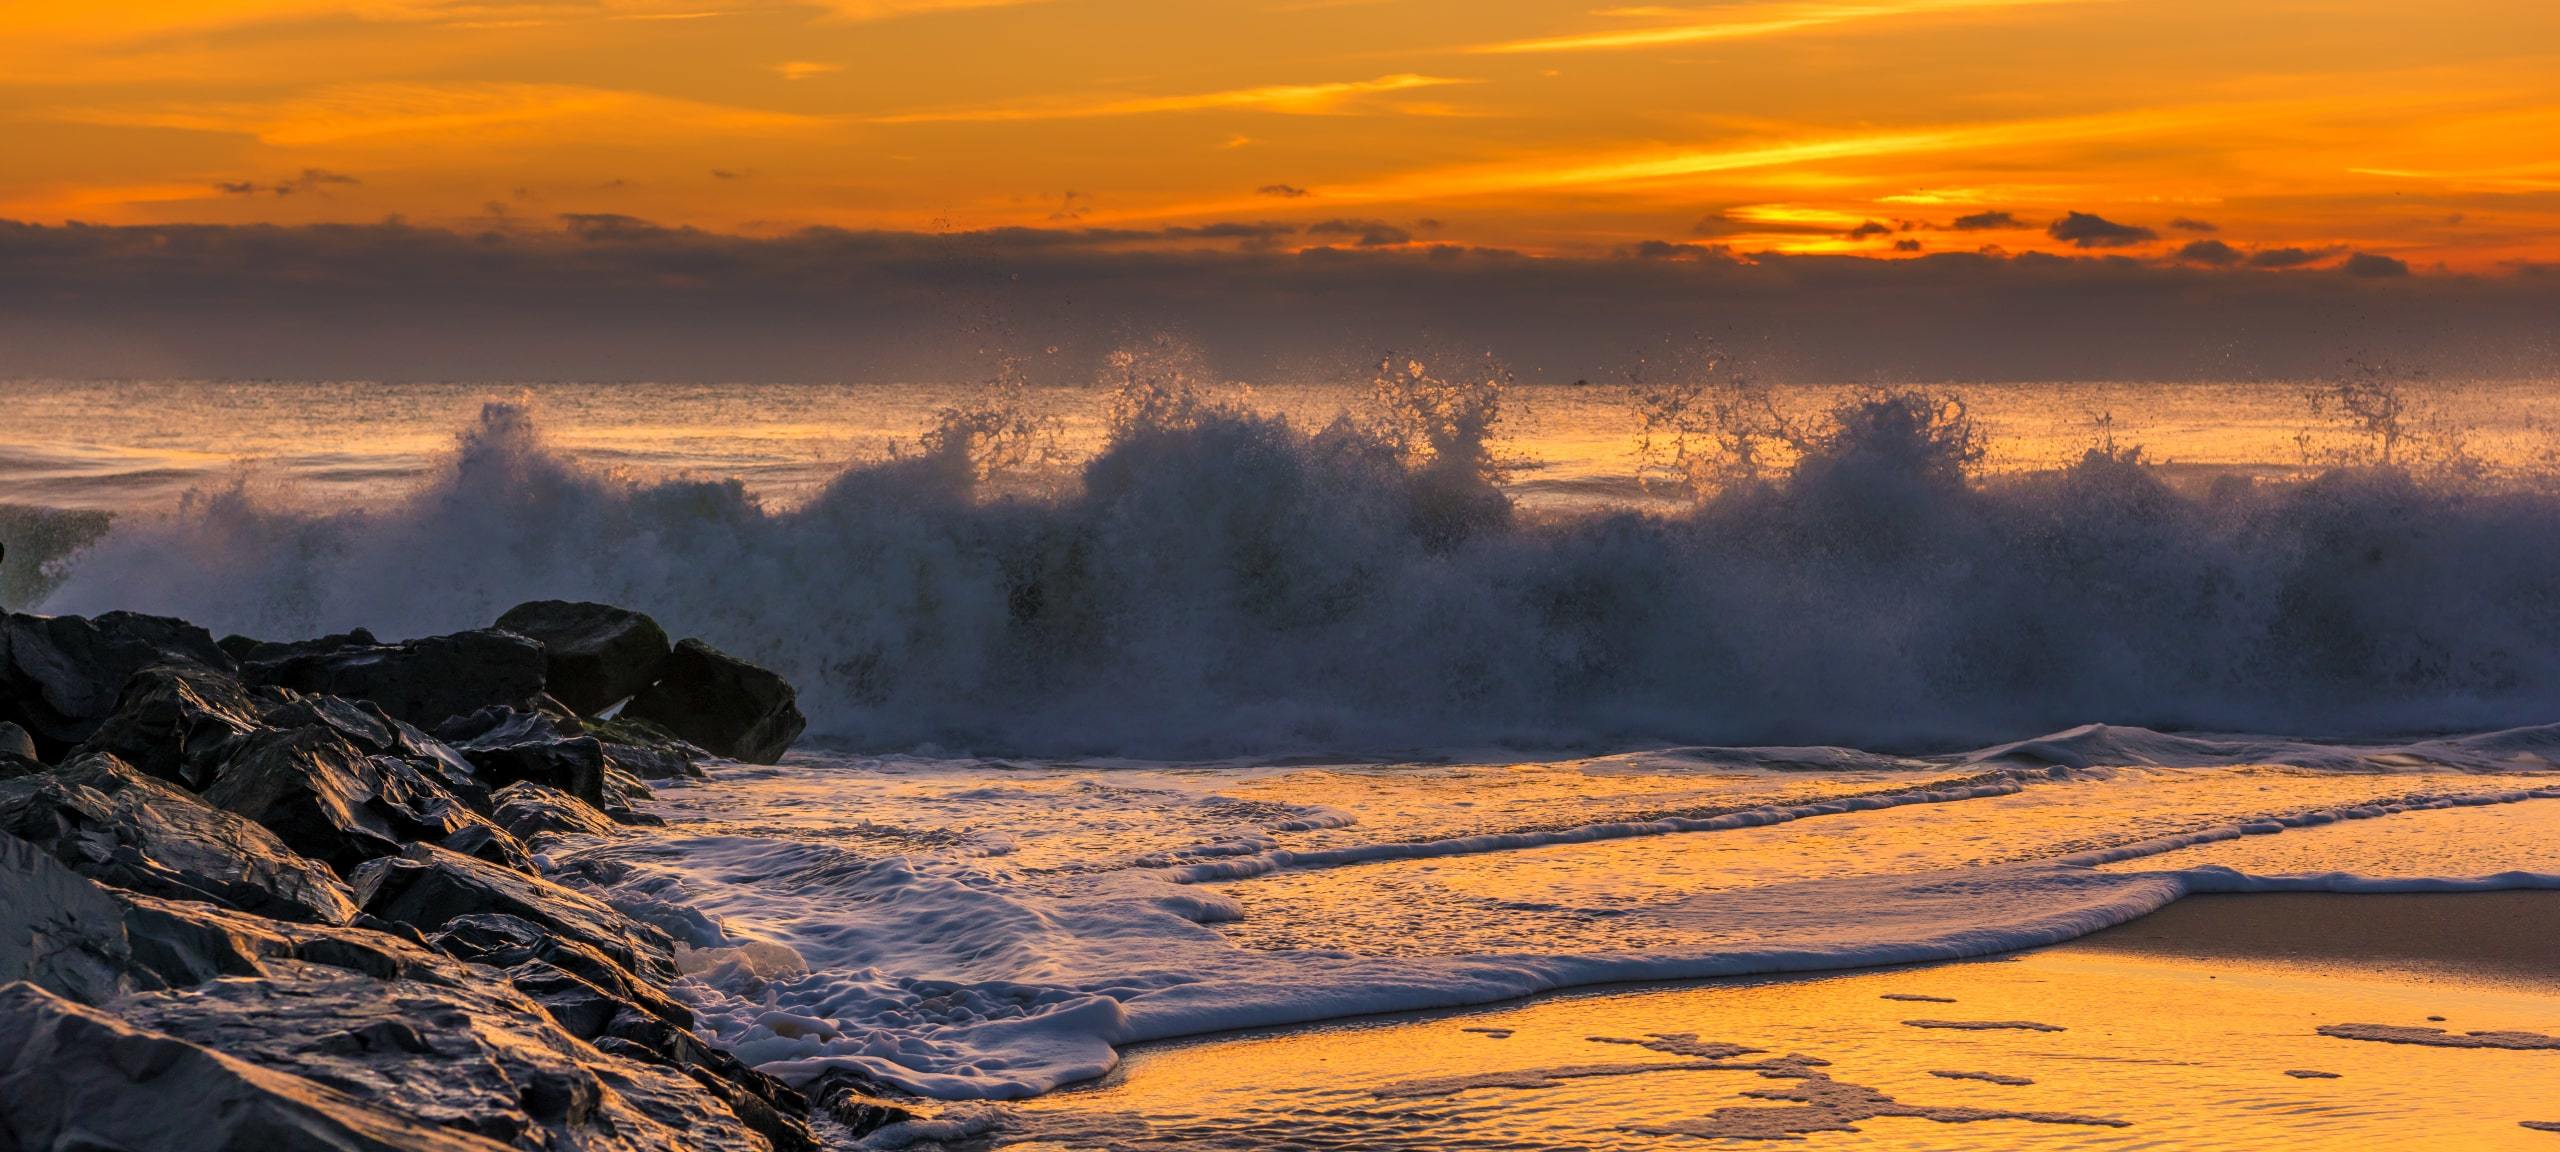 Waves crashing upon Bay Head, NJ rocks during yellow sunrise